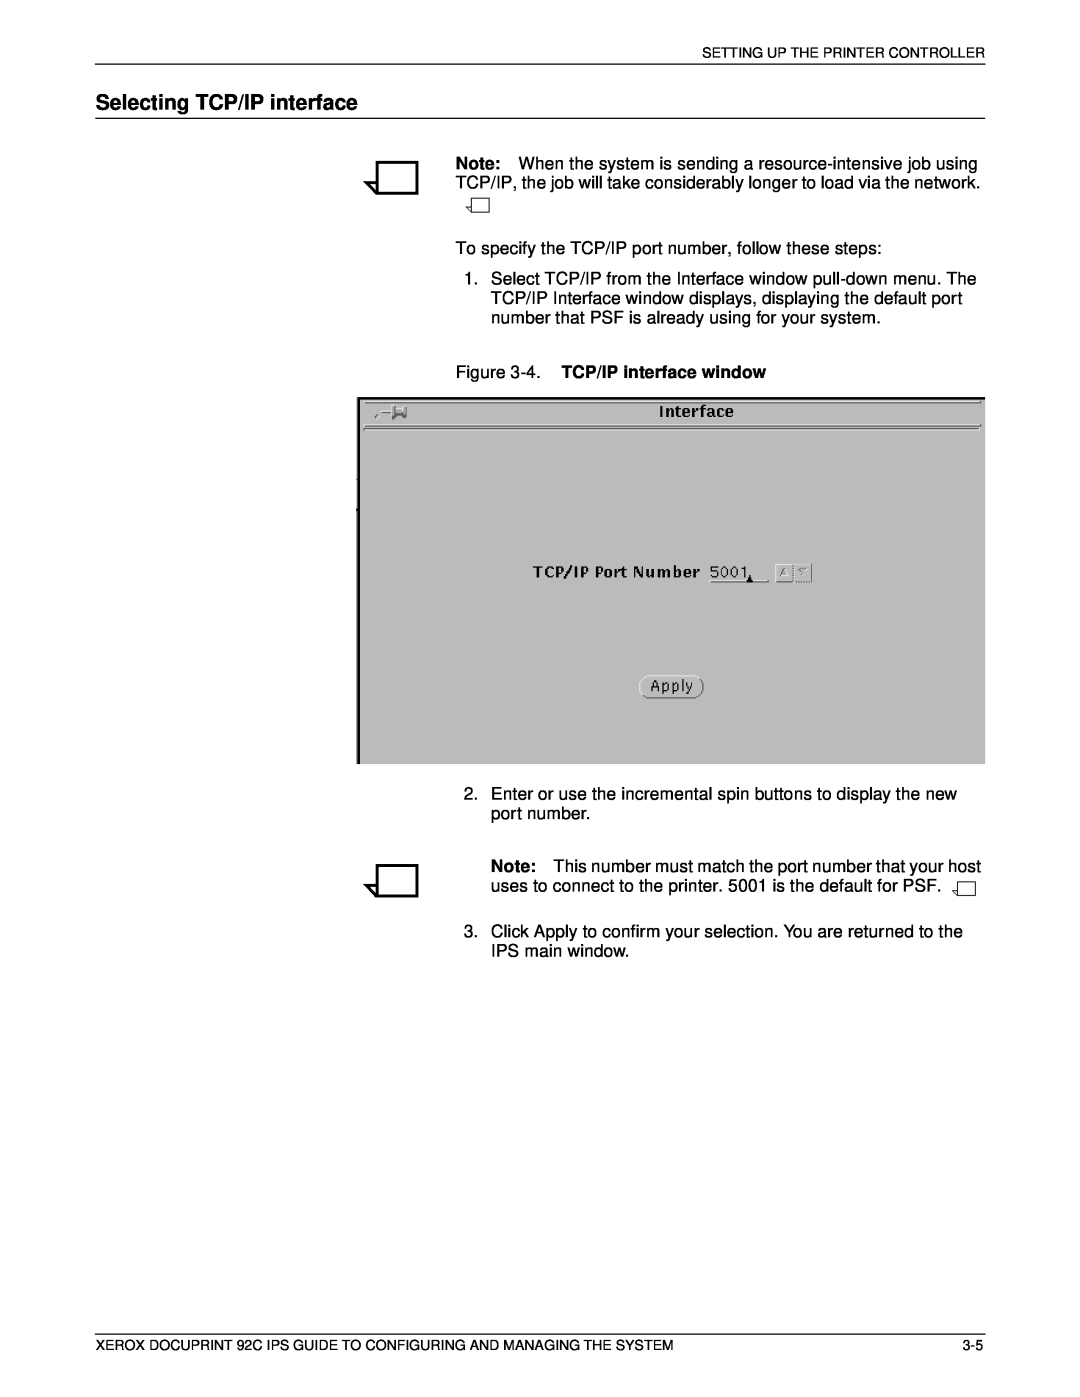 Xerox 92C IPS manual Selecting TCP/IP interface, 4. TCP/IP interface window 